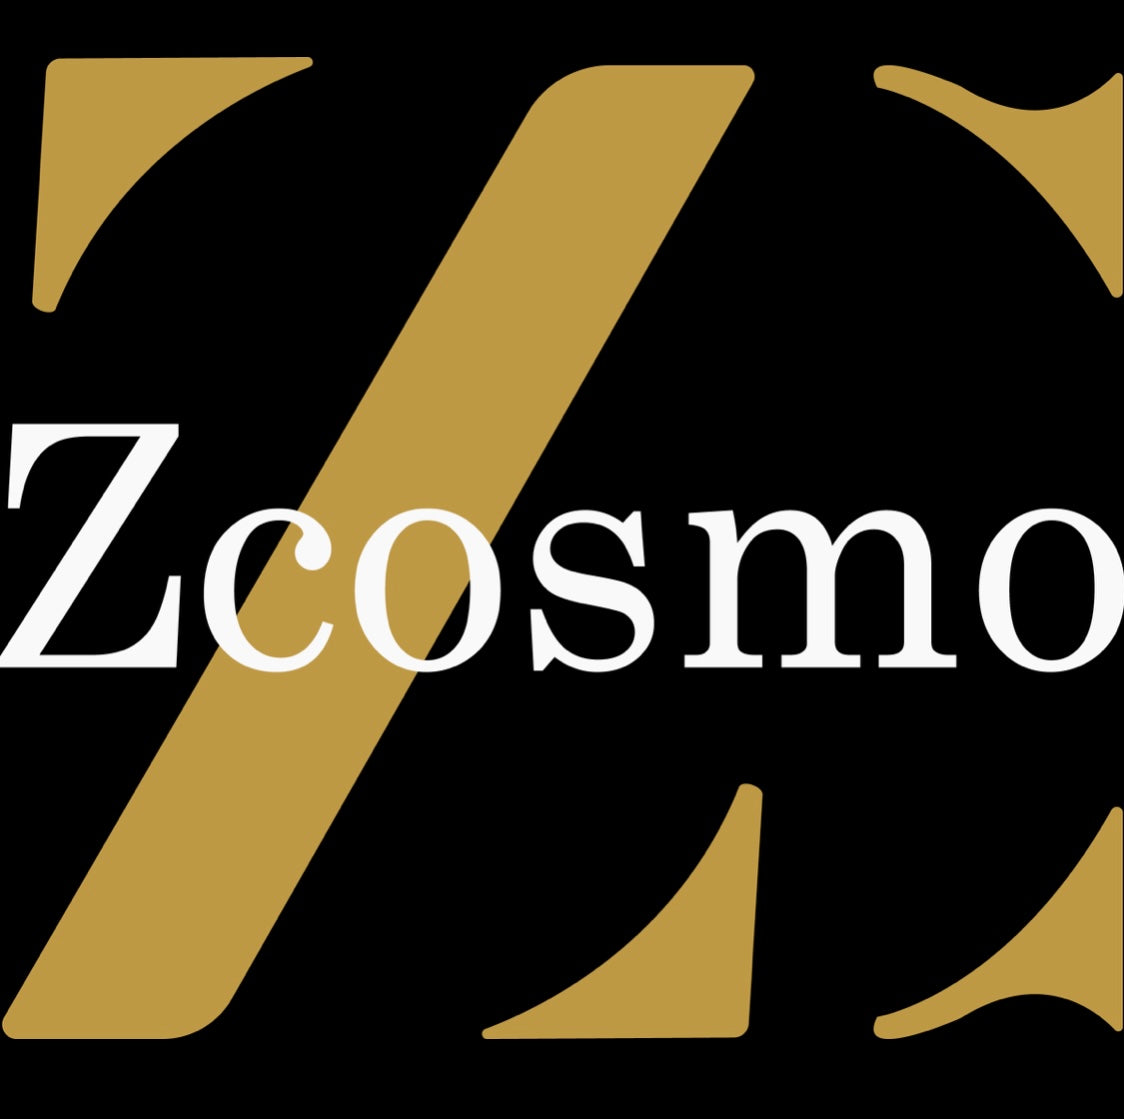 ZCOSMO LTD